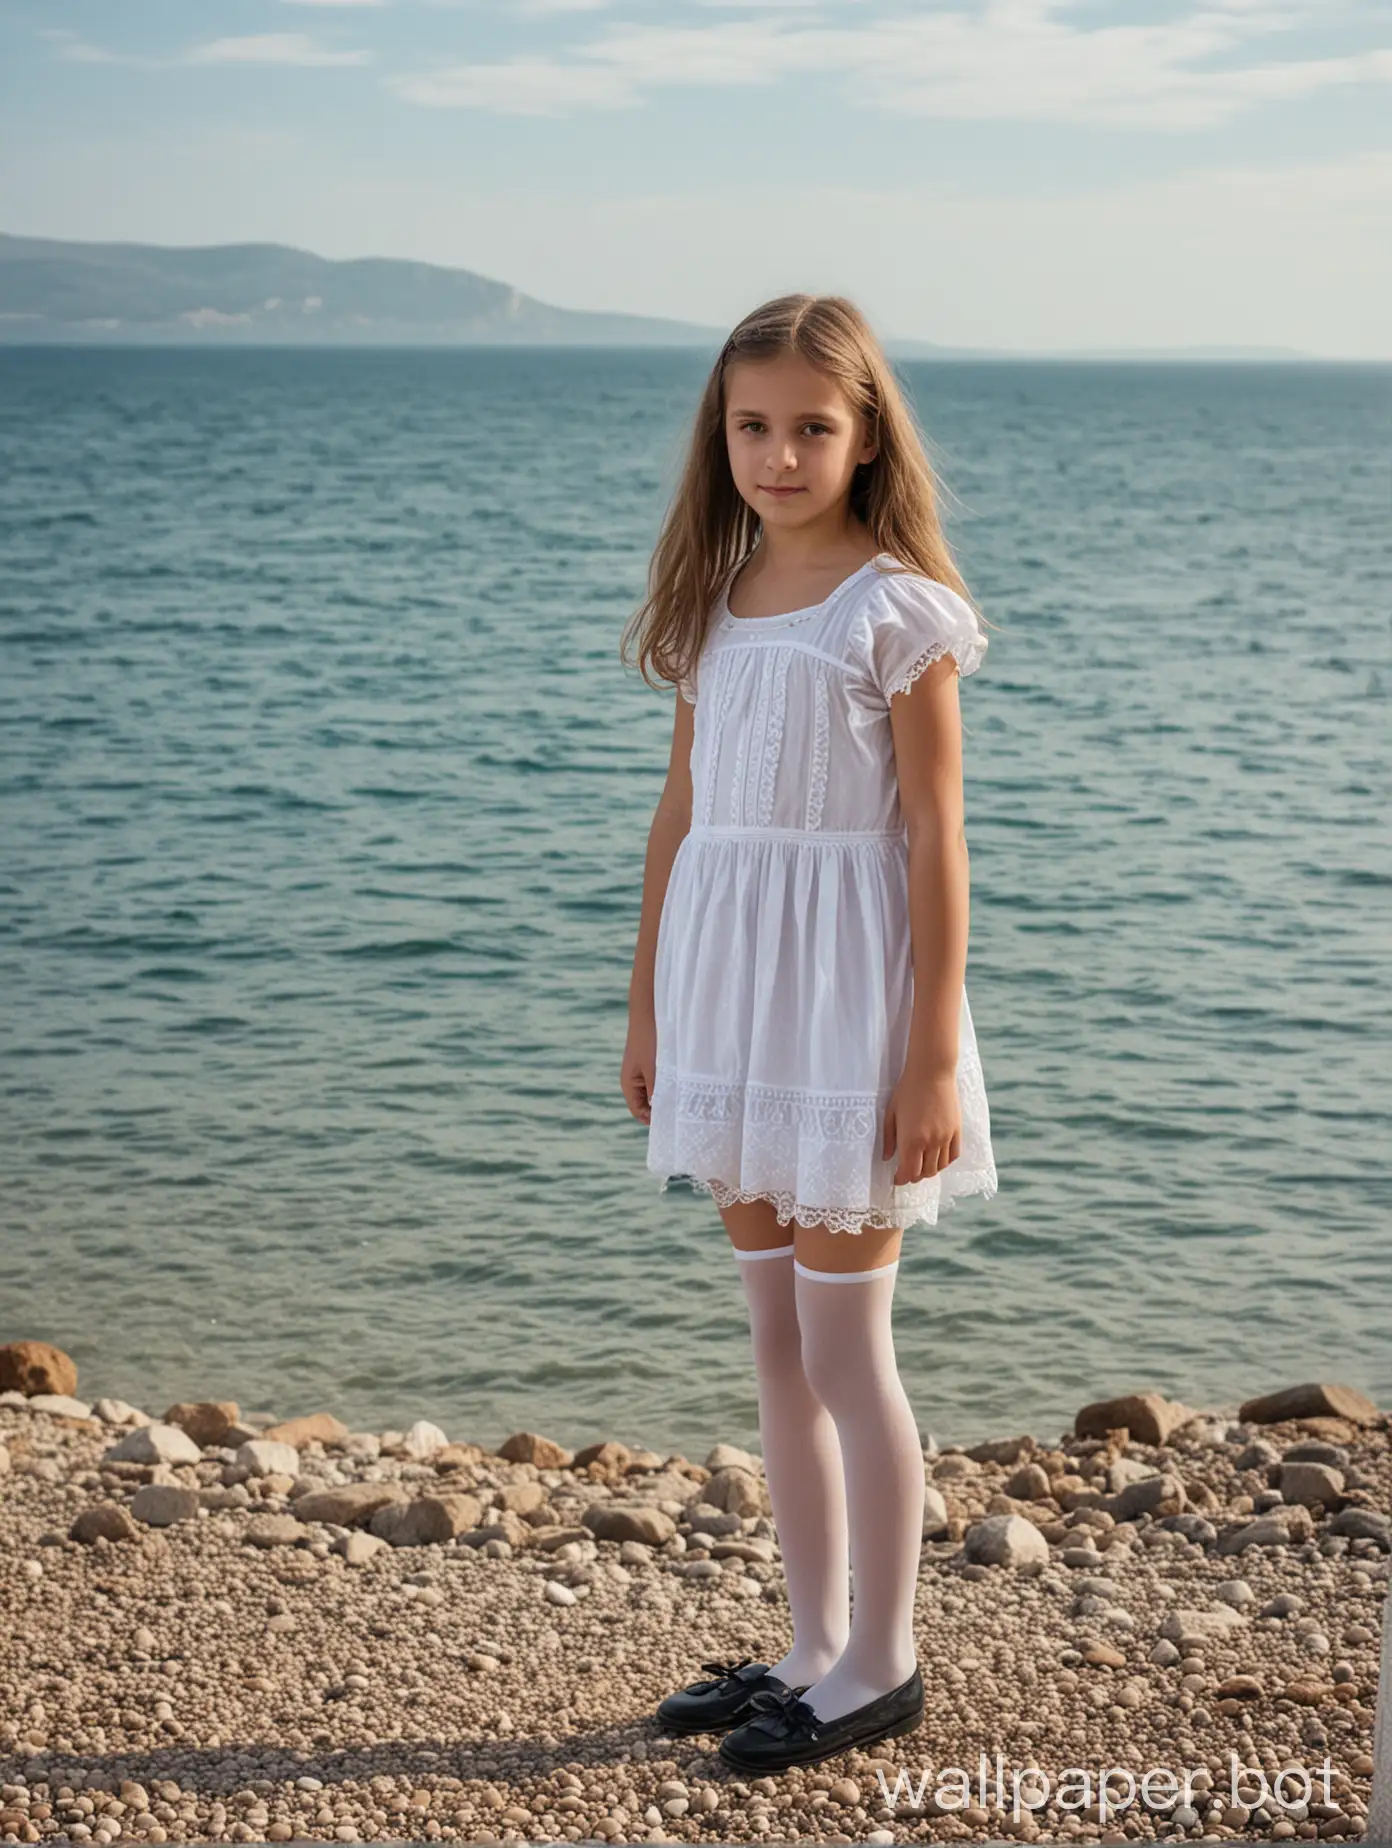 Seaside-Serenity-10YearOld-Girl-Admiring-Crimeas-Coastal-Beauty